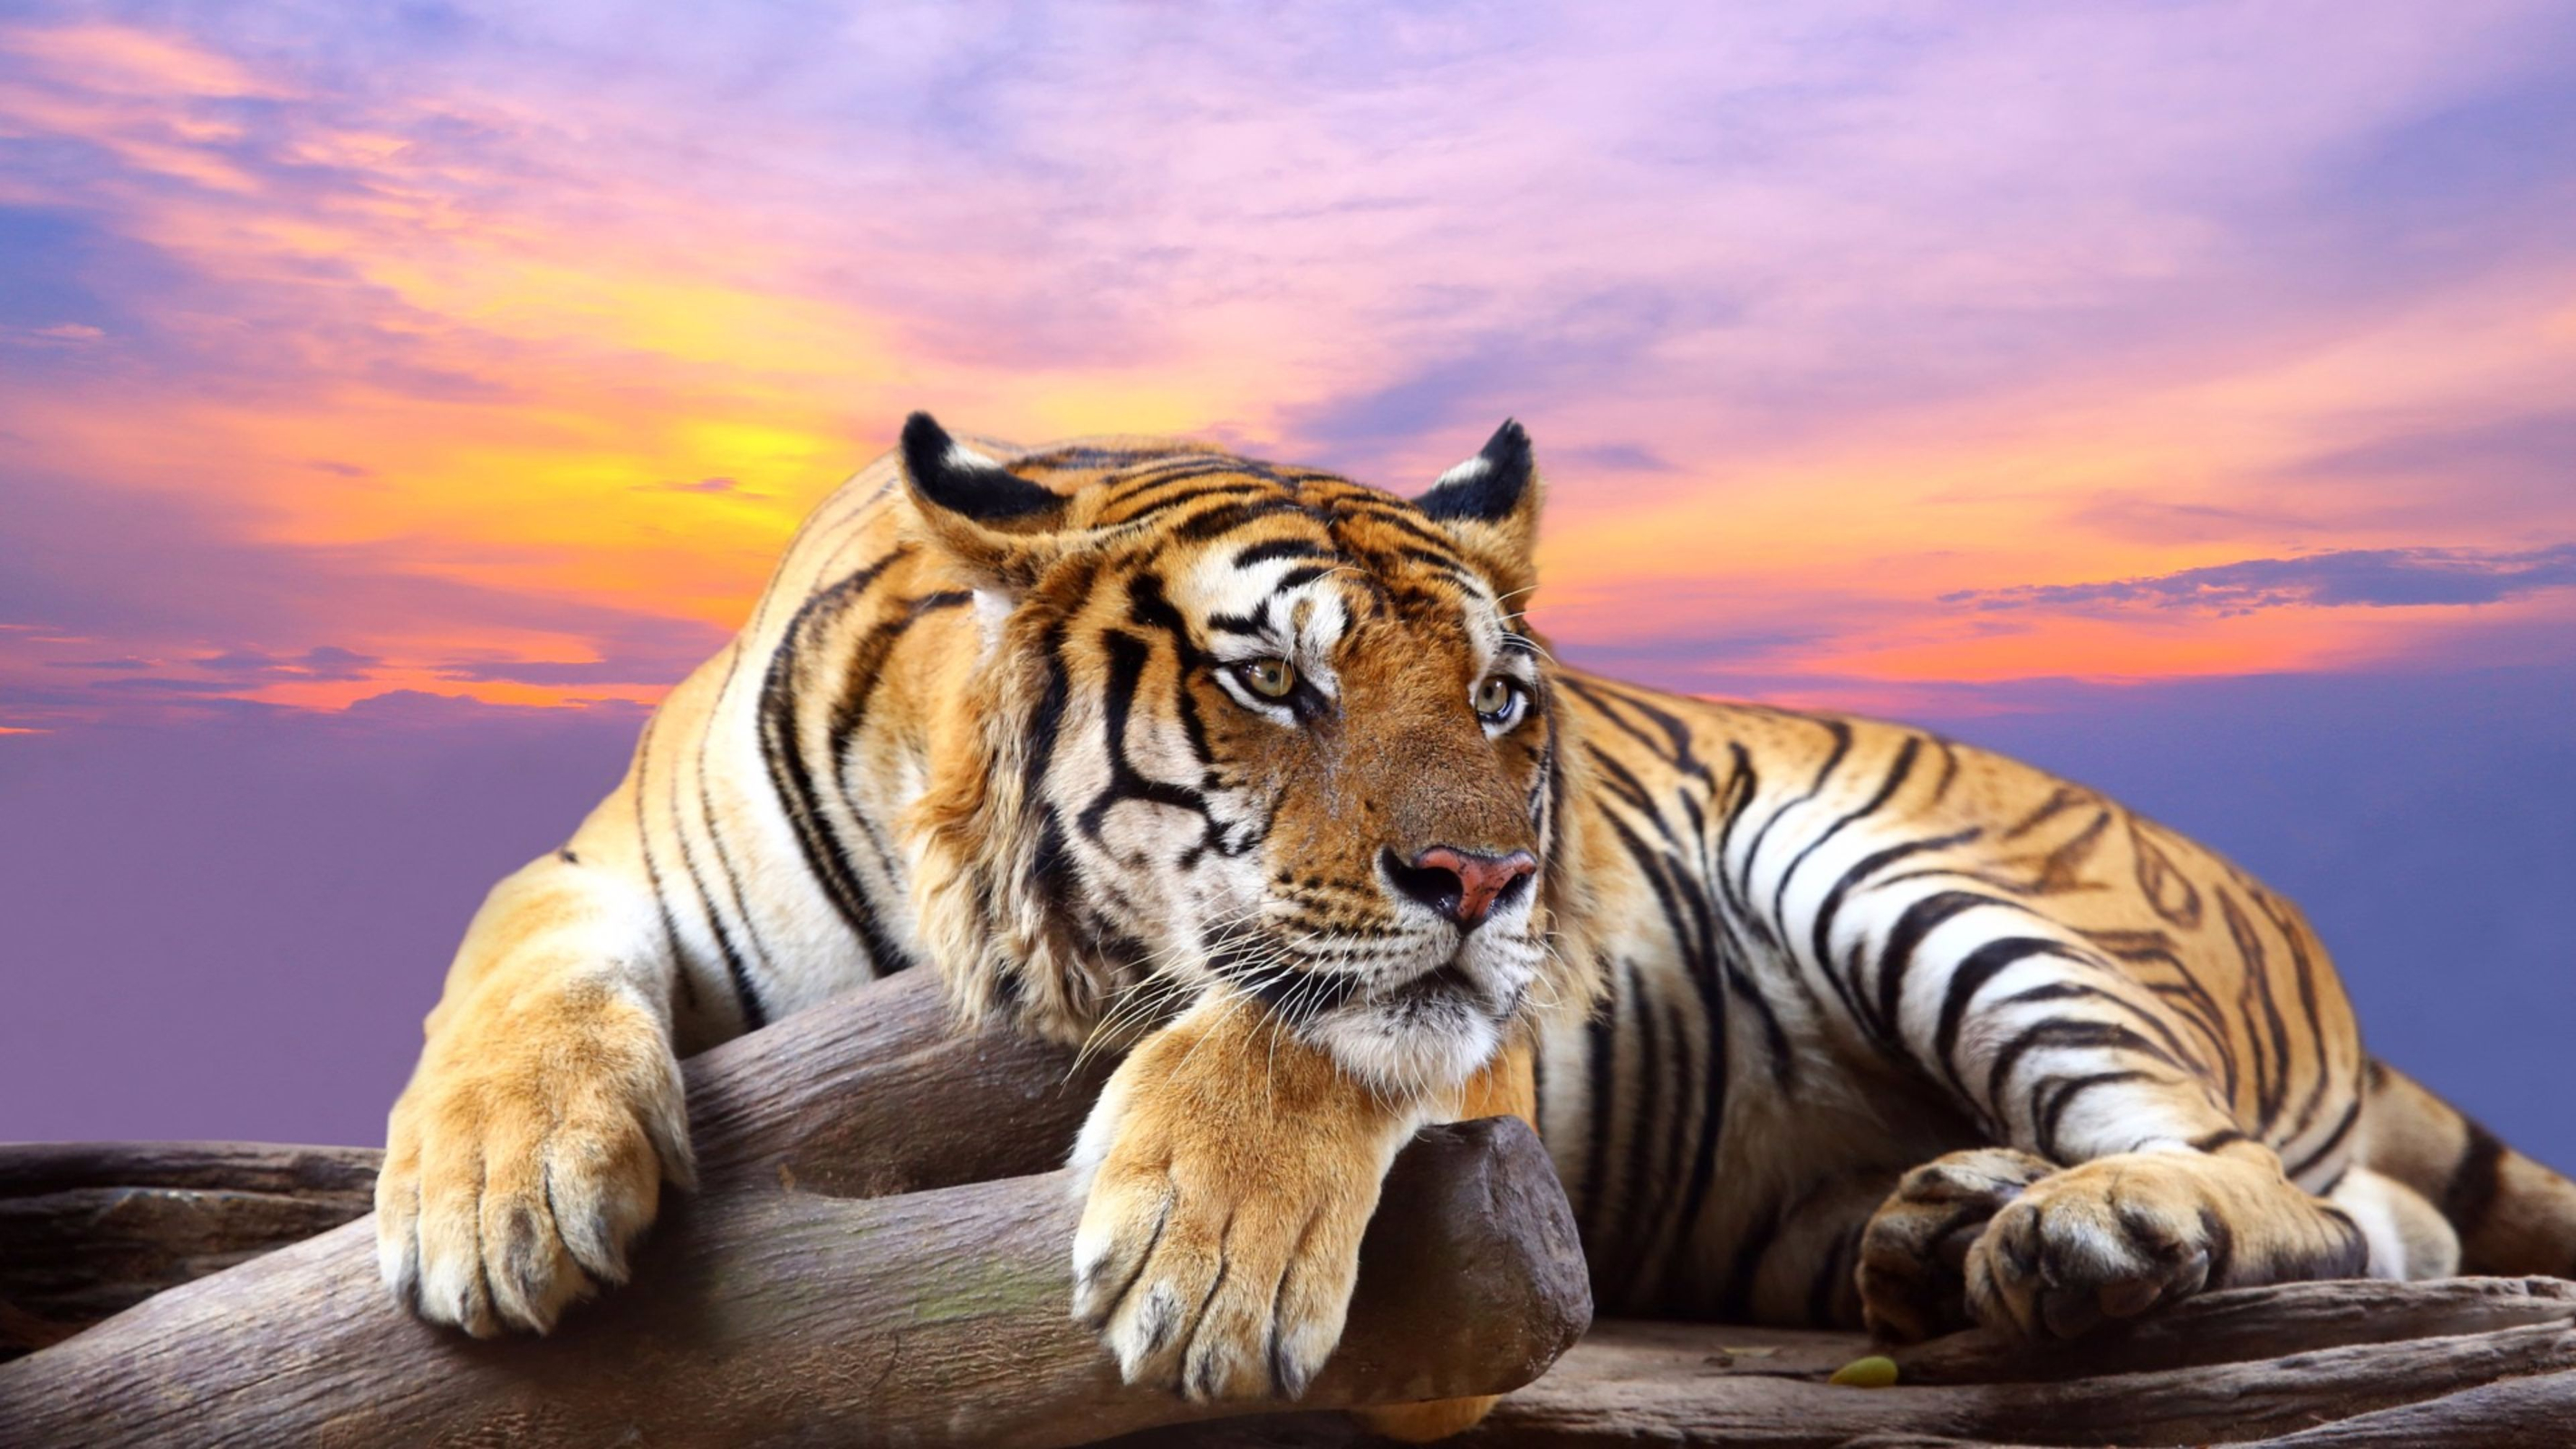 407307 descargar imagen animales, tigre, descansando, atardecer, gatos: fondos de pantalla y protectores de pantalla gratis